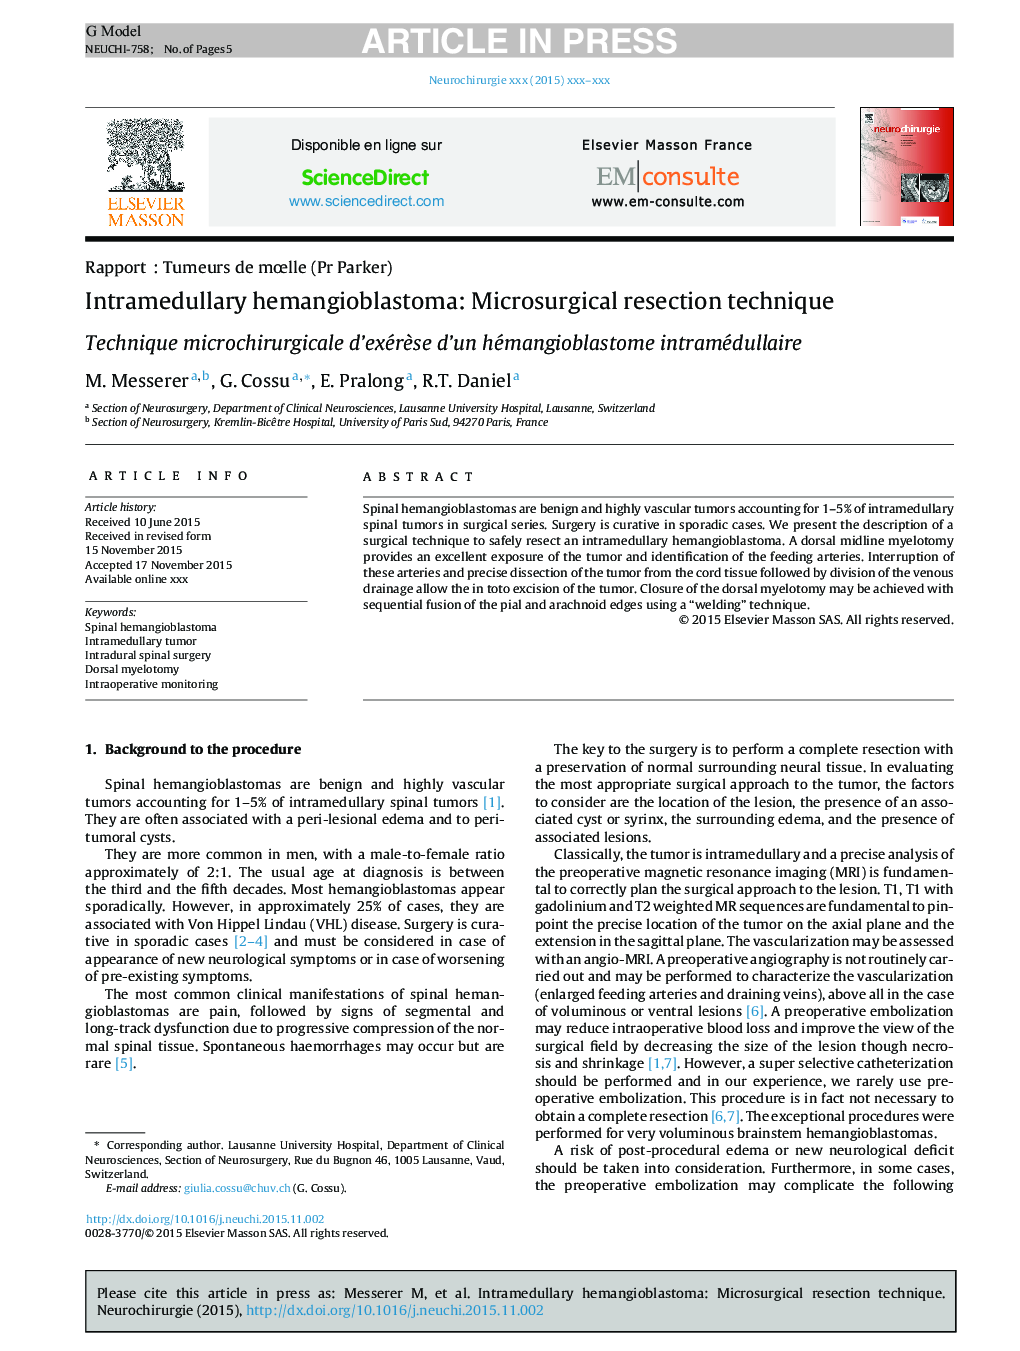 Intramedullary hemangioblastoma: Microsurgical resection technique